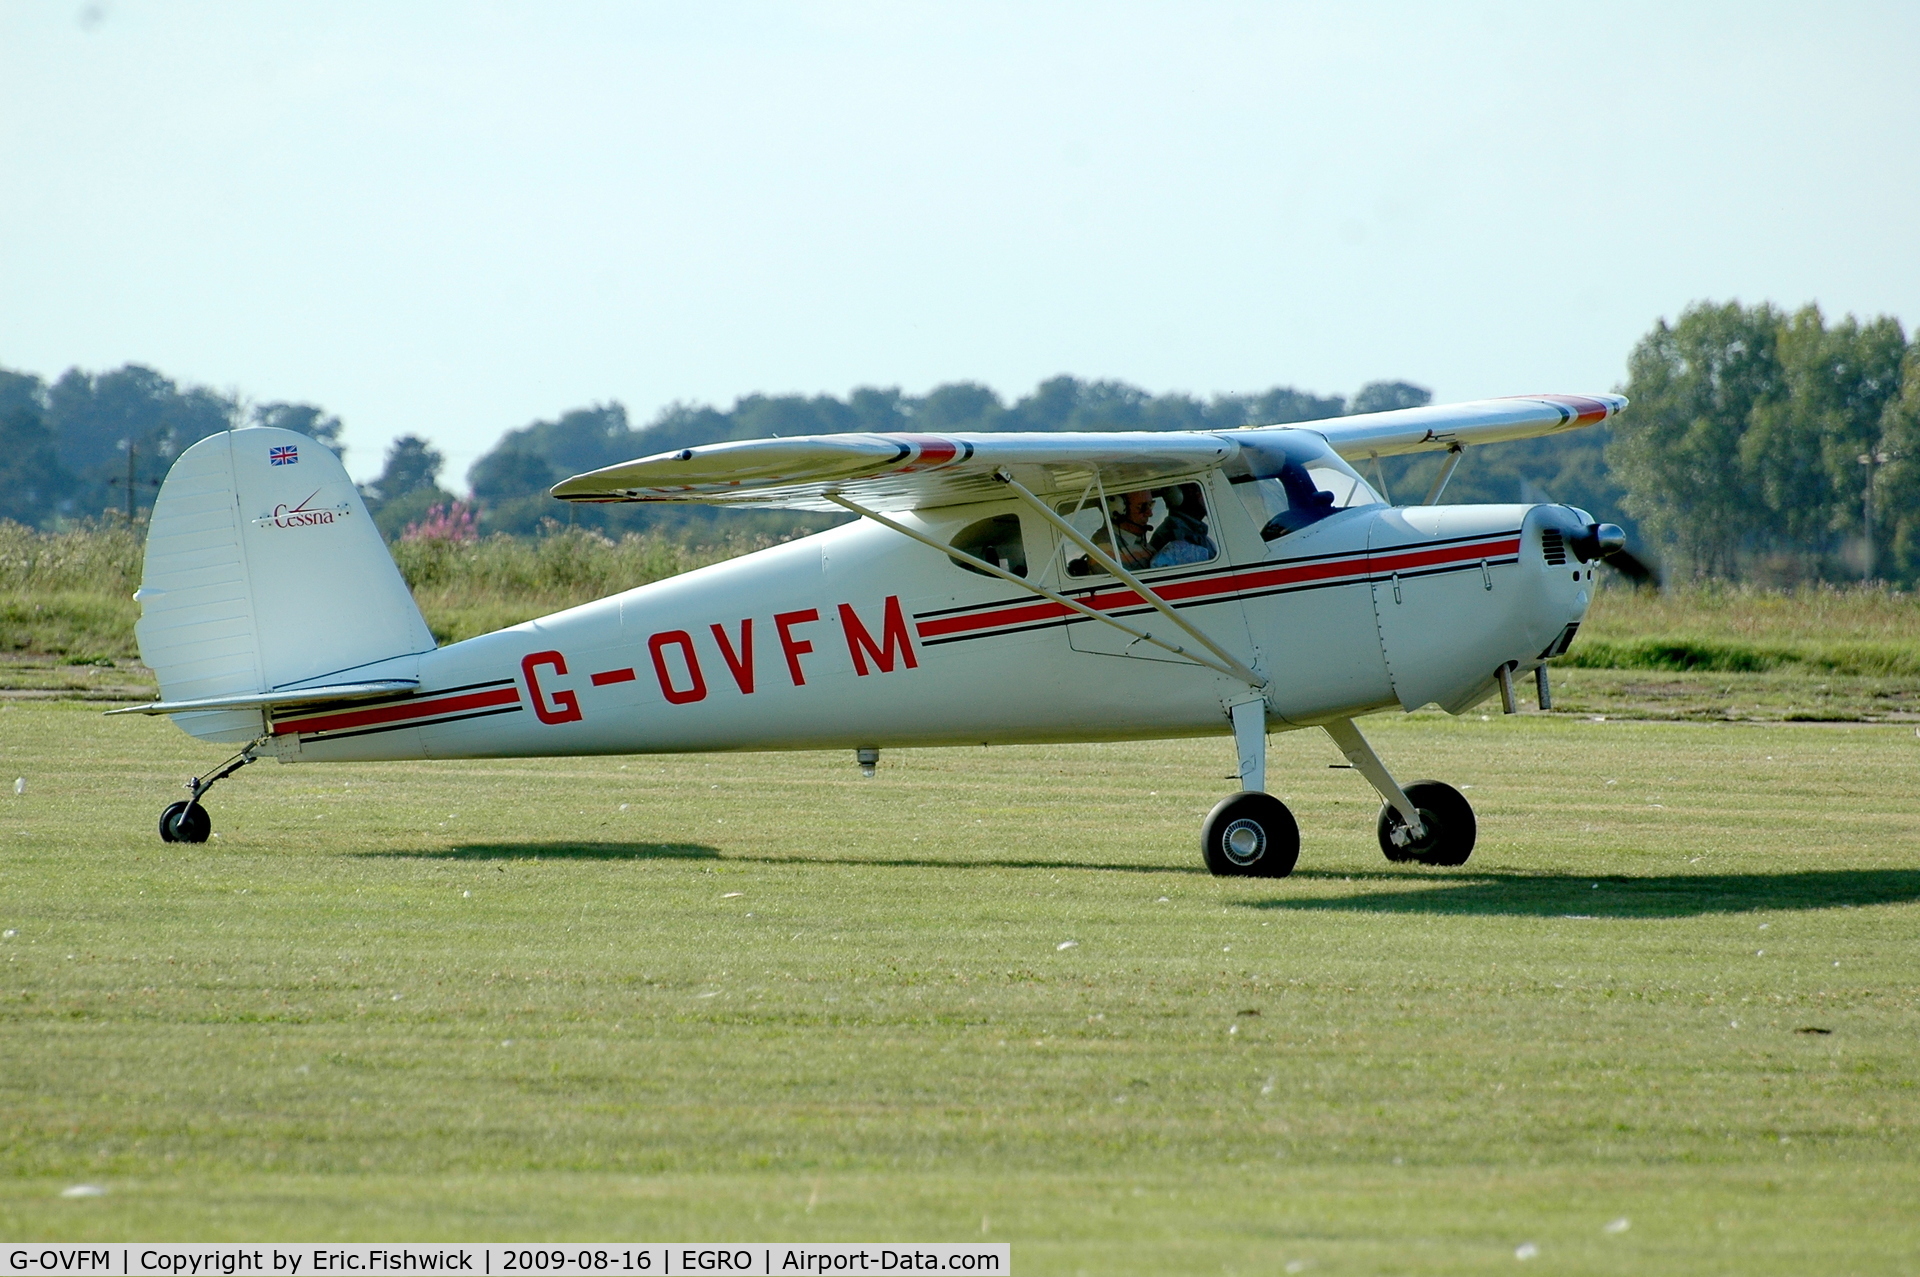 G-OVFM, 1948 Cessna 120 C/N 14720, G-OVFM at Heart Air Display, Rougham Airfield Aug 09